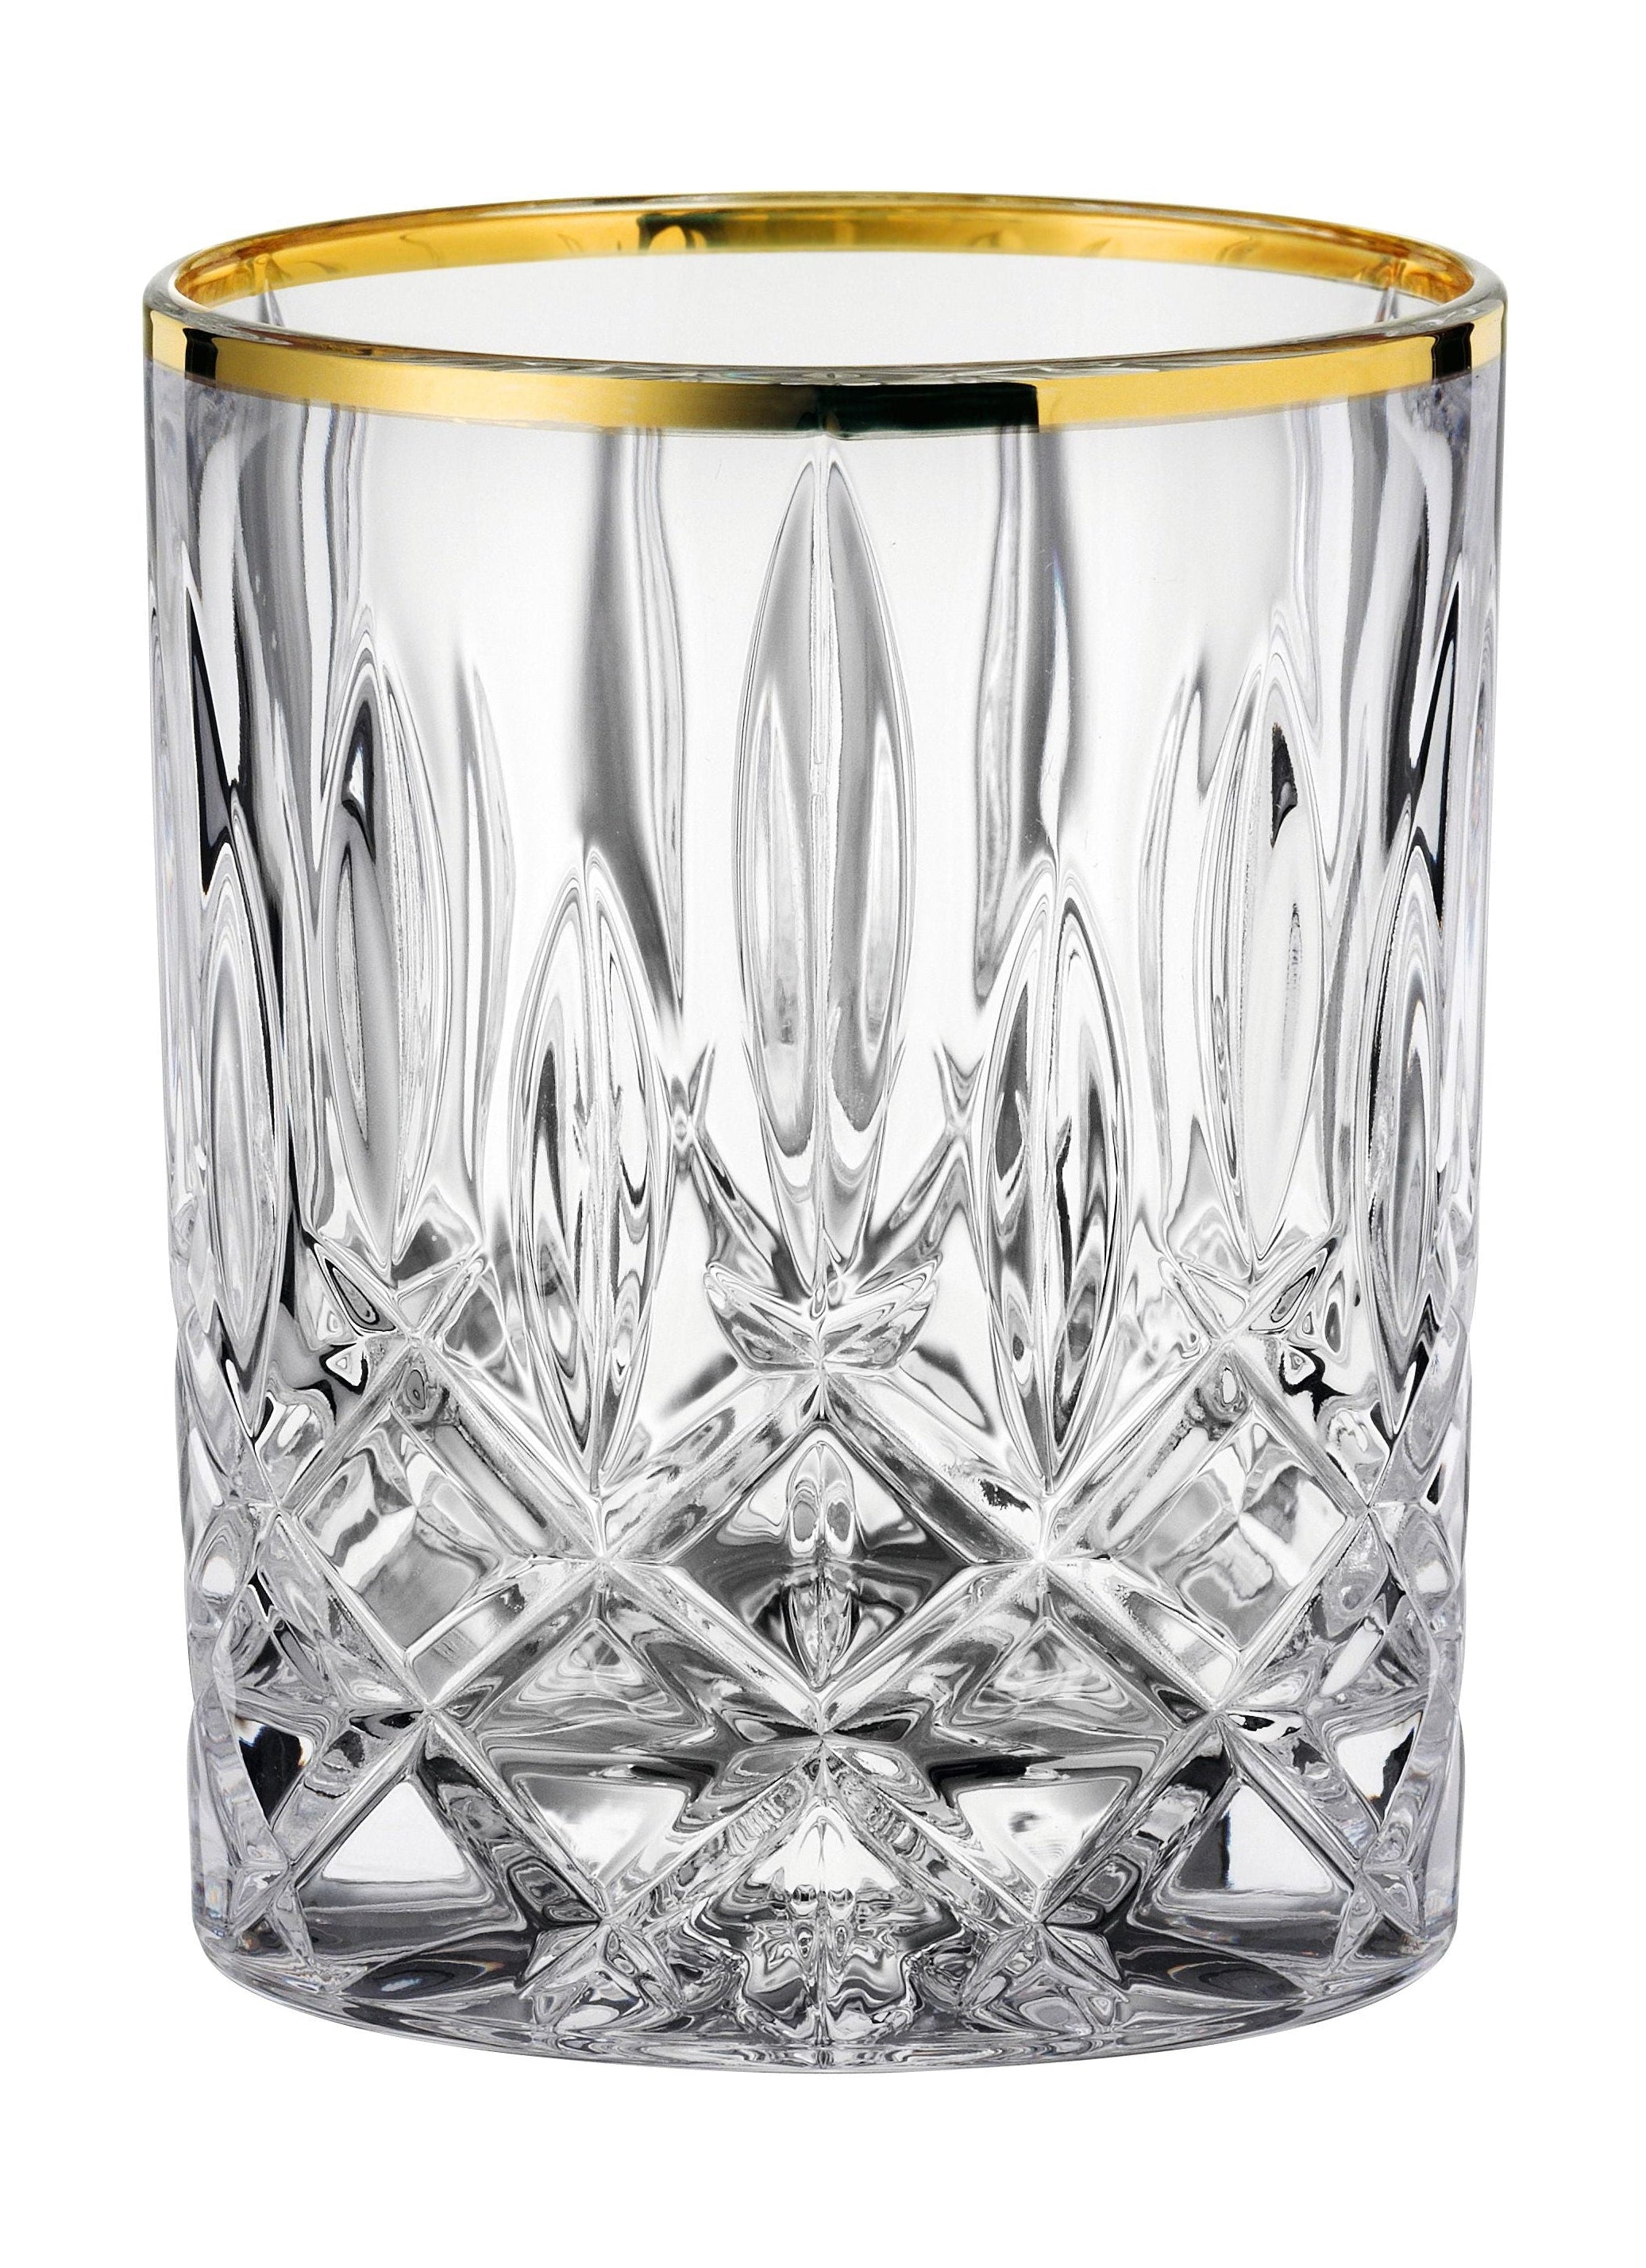 Nachtmann Noblesse Gold Whiskyglas 295 ml, 2 Stk.